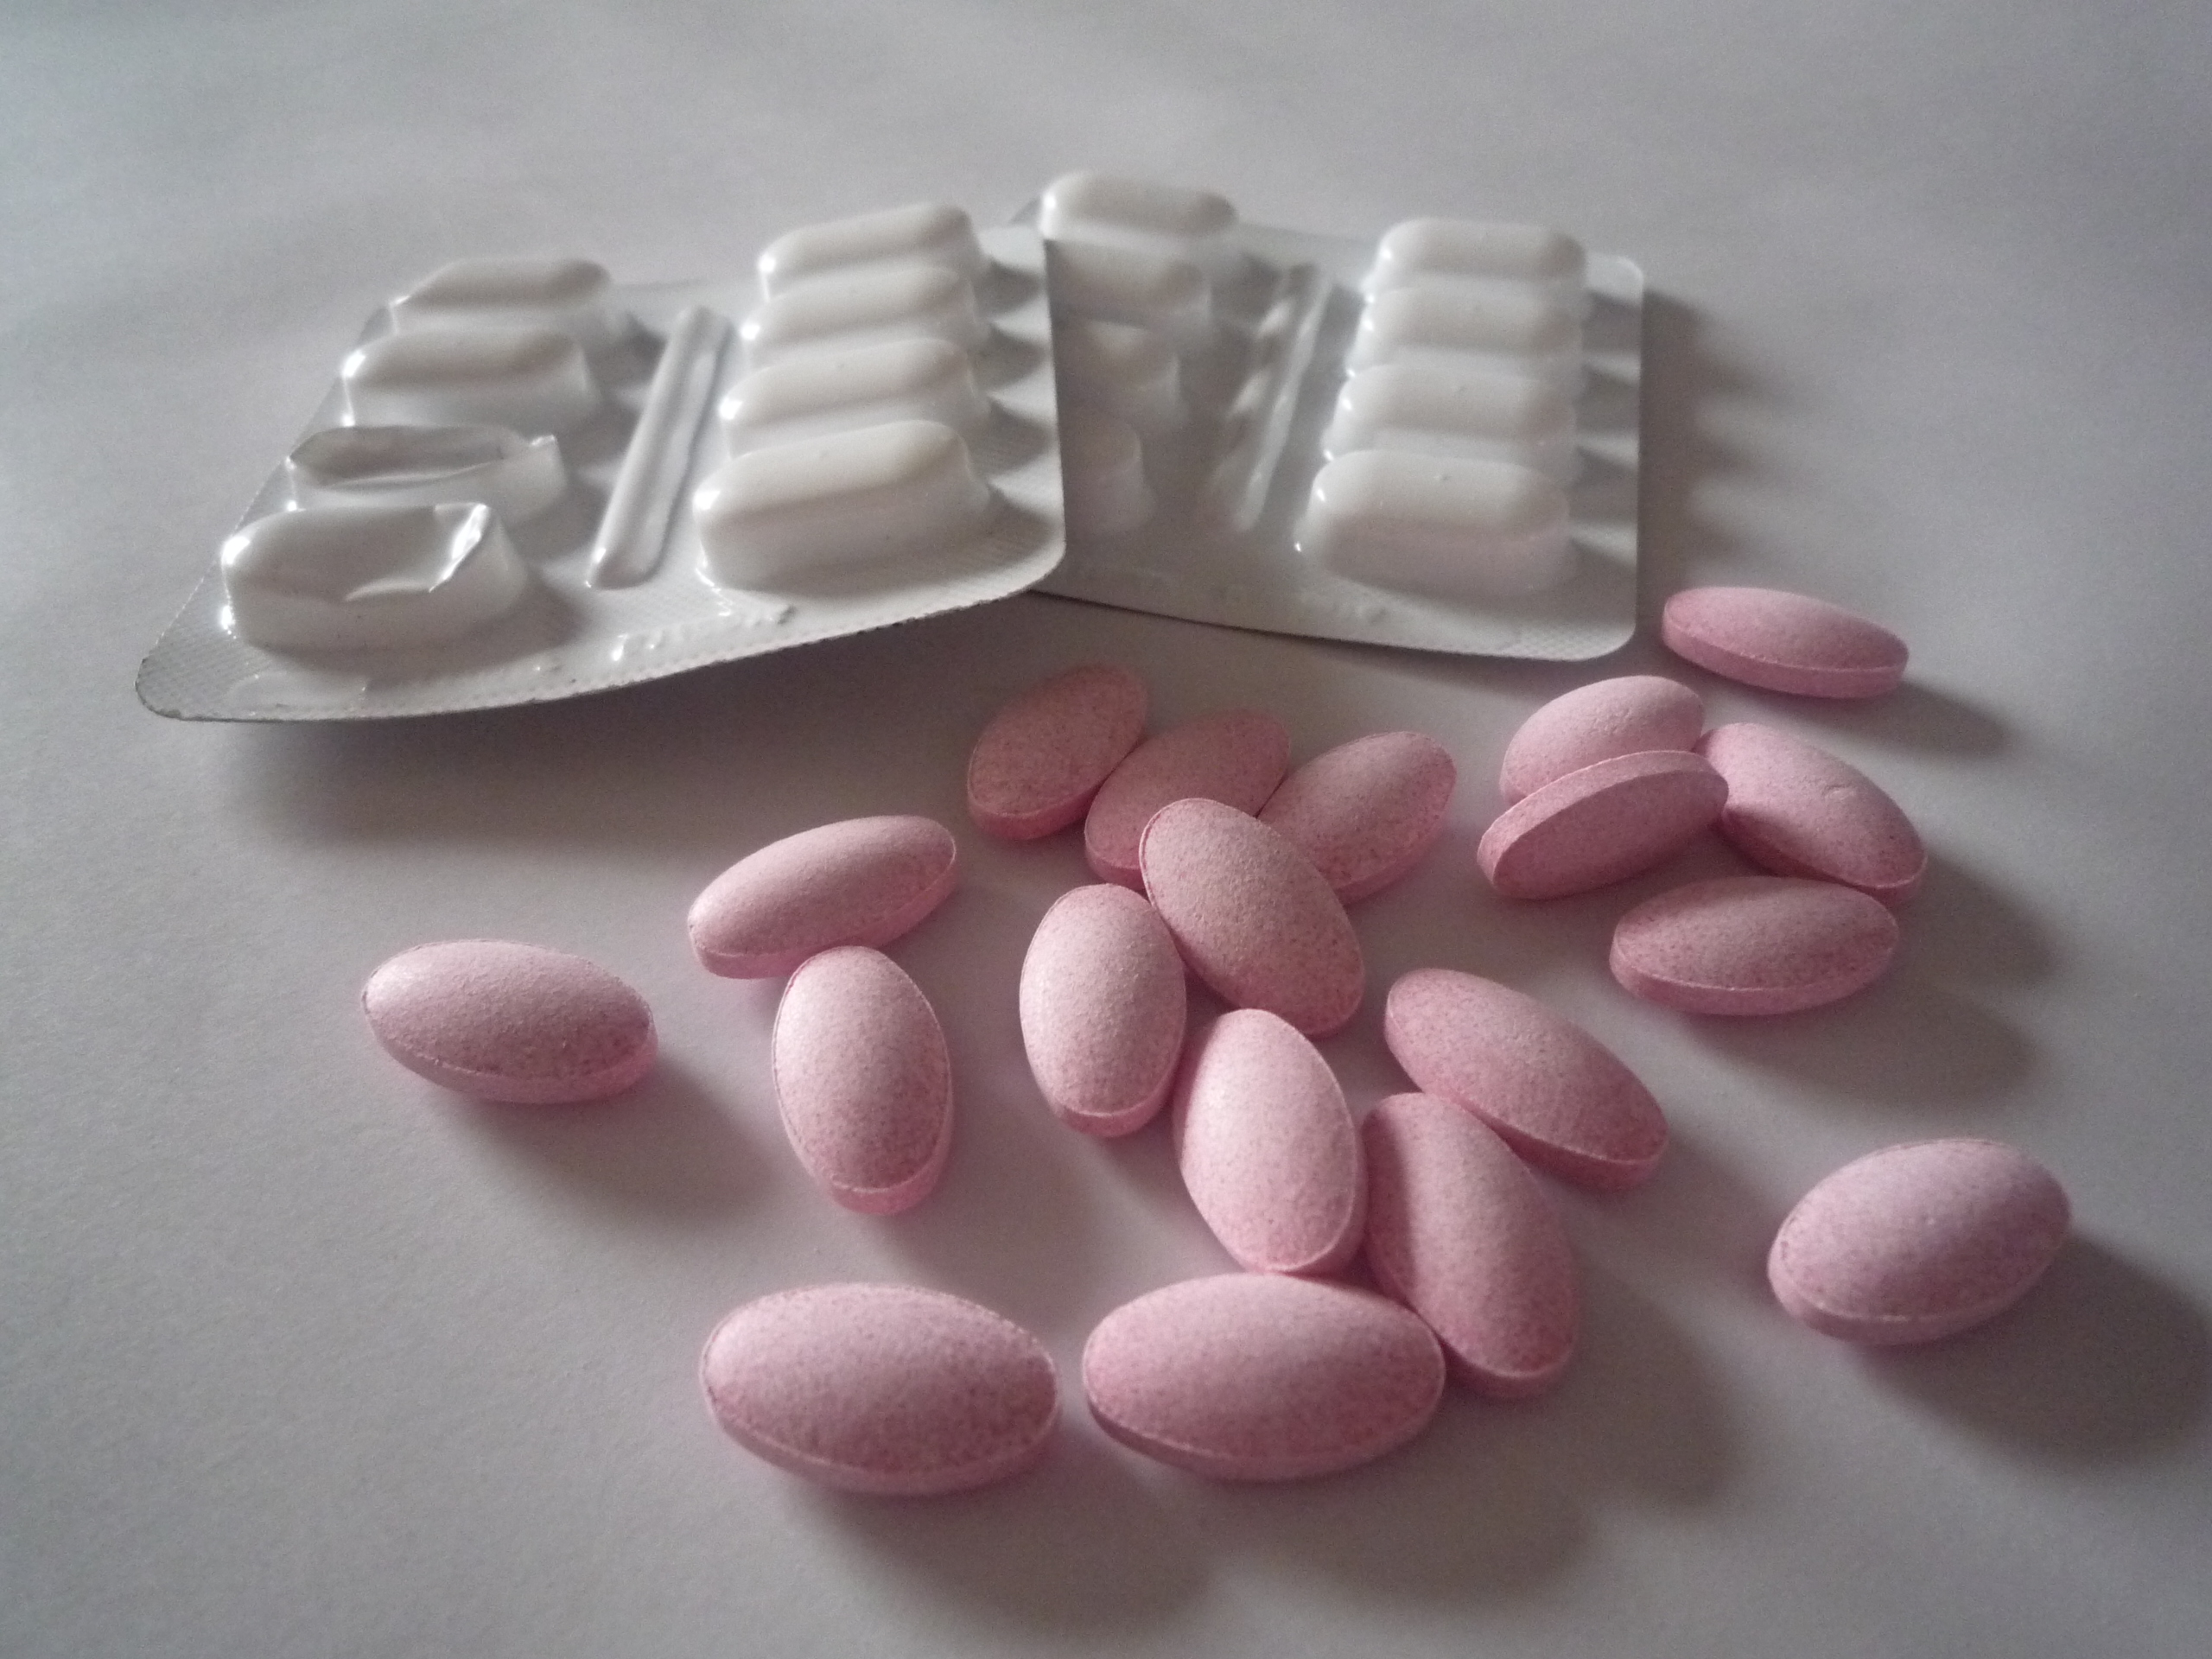 JVS image - Prescription drugs